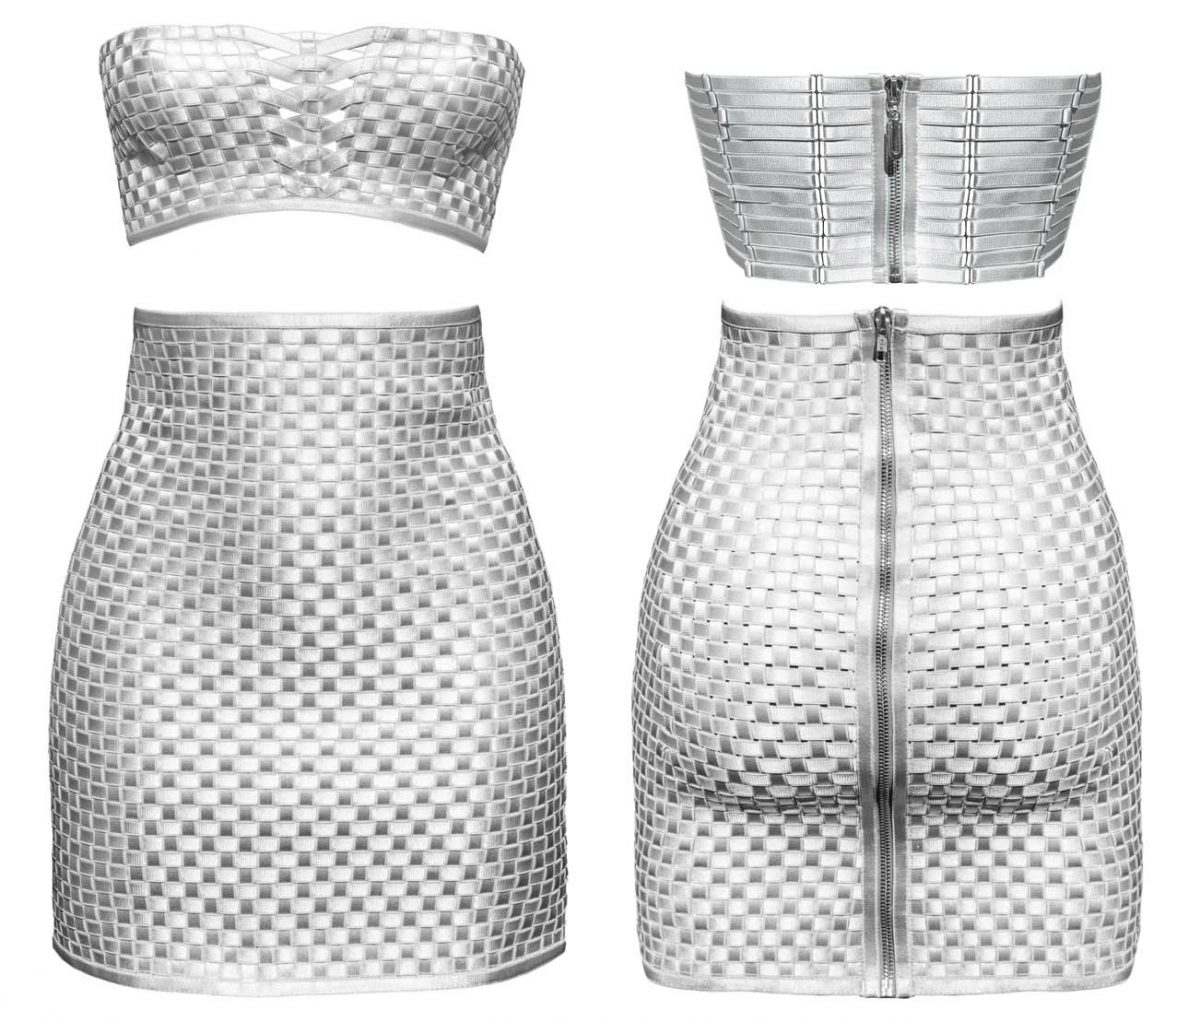 Keosme Dominata Kufiya silver elastic bra top and Nirvana bondage skirt